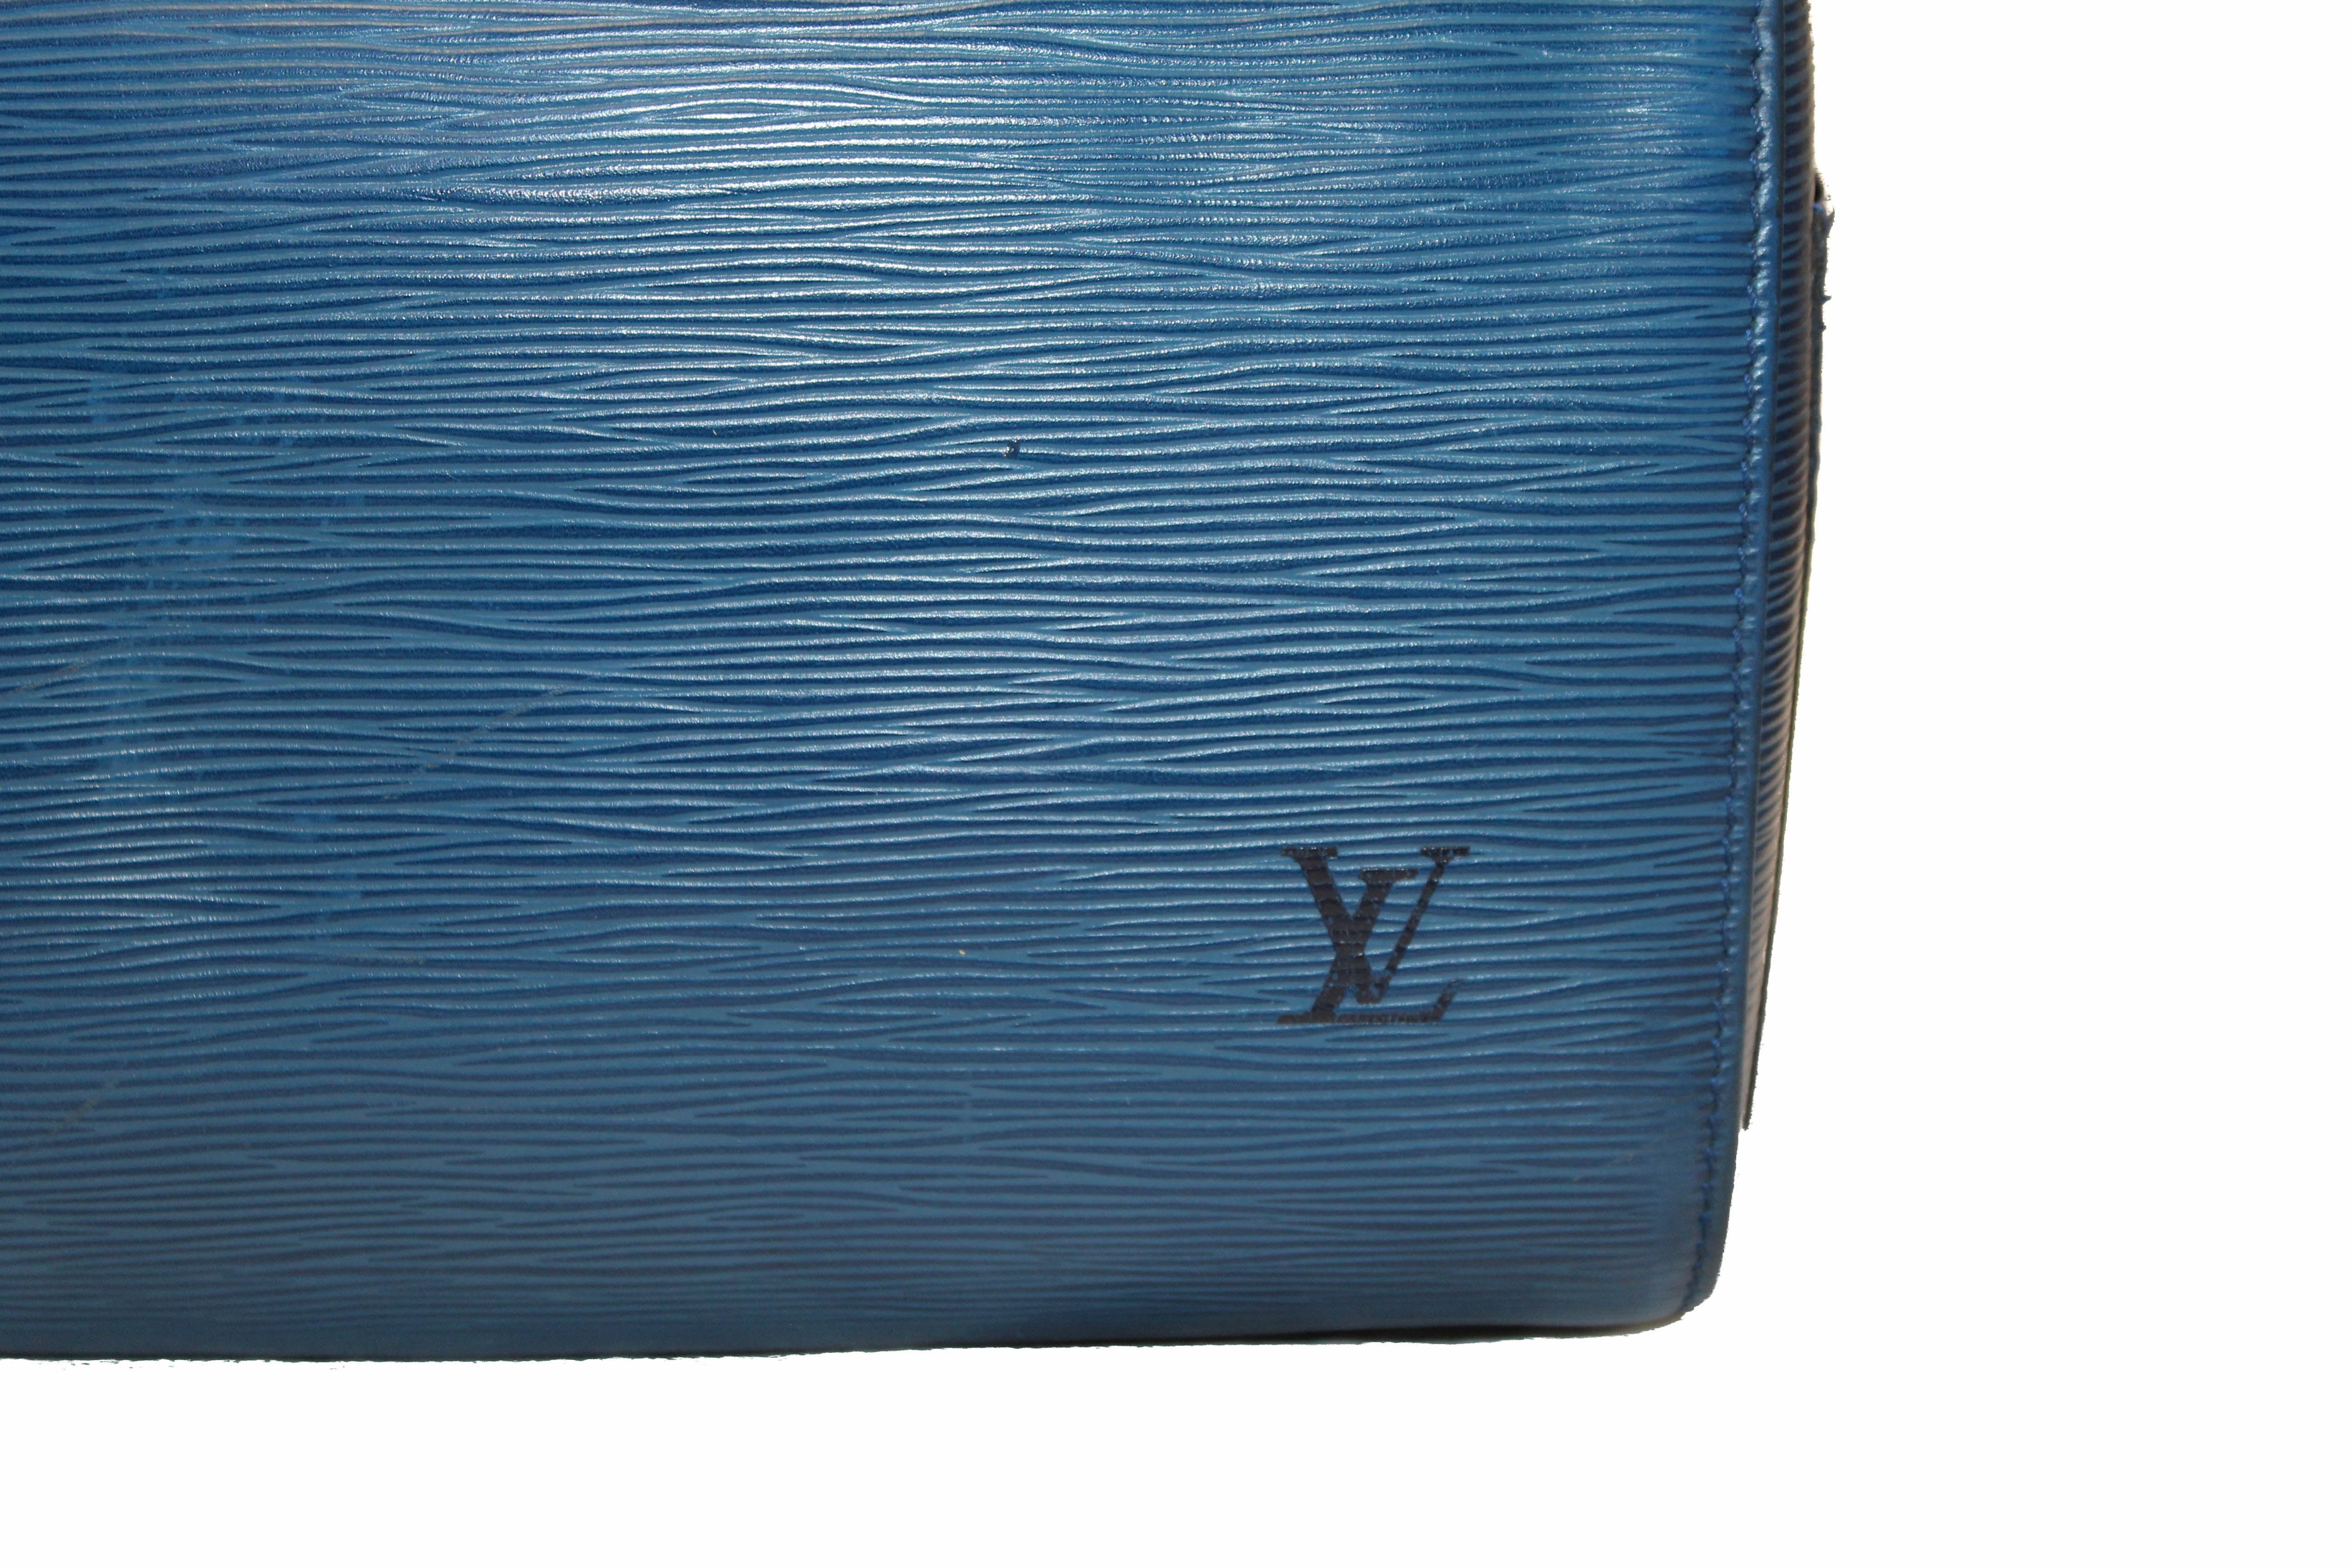 Louis Vuitton Vintage Louis Vuitton Speedy 30 Blue Epi Leather City